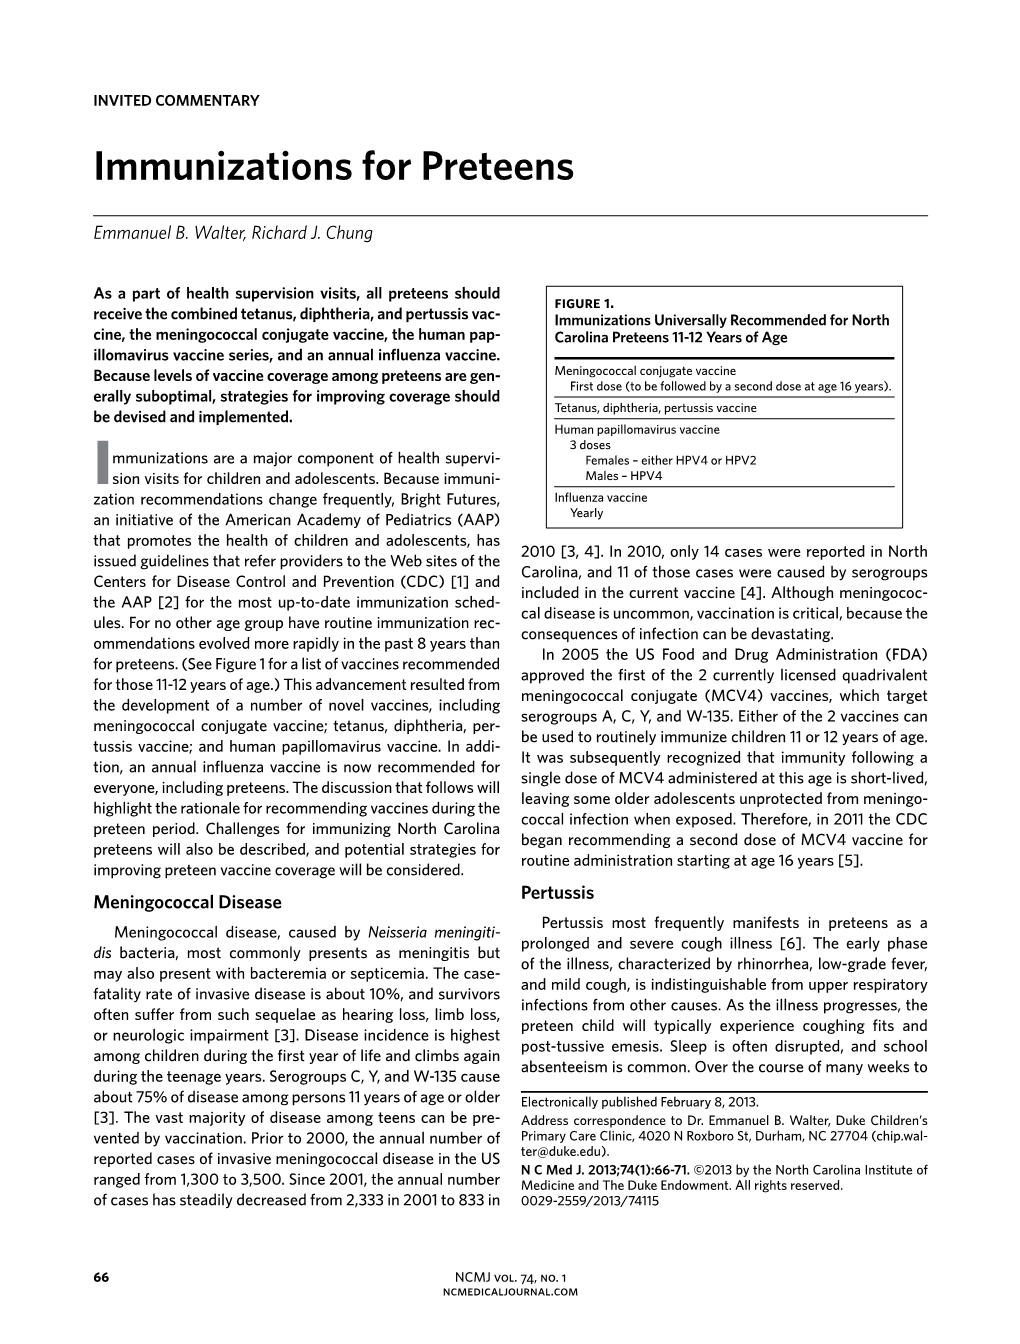 Immunizations for Preteens